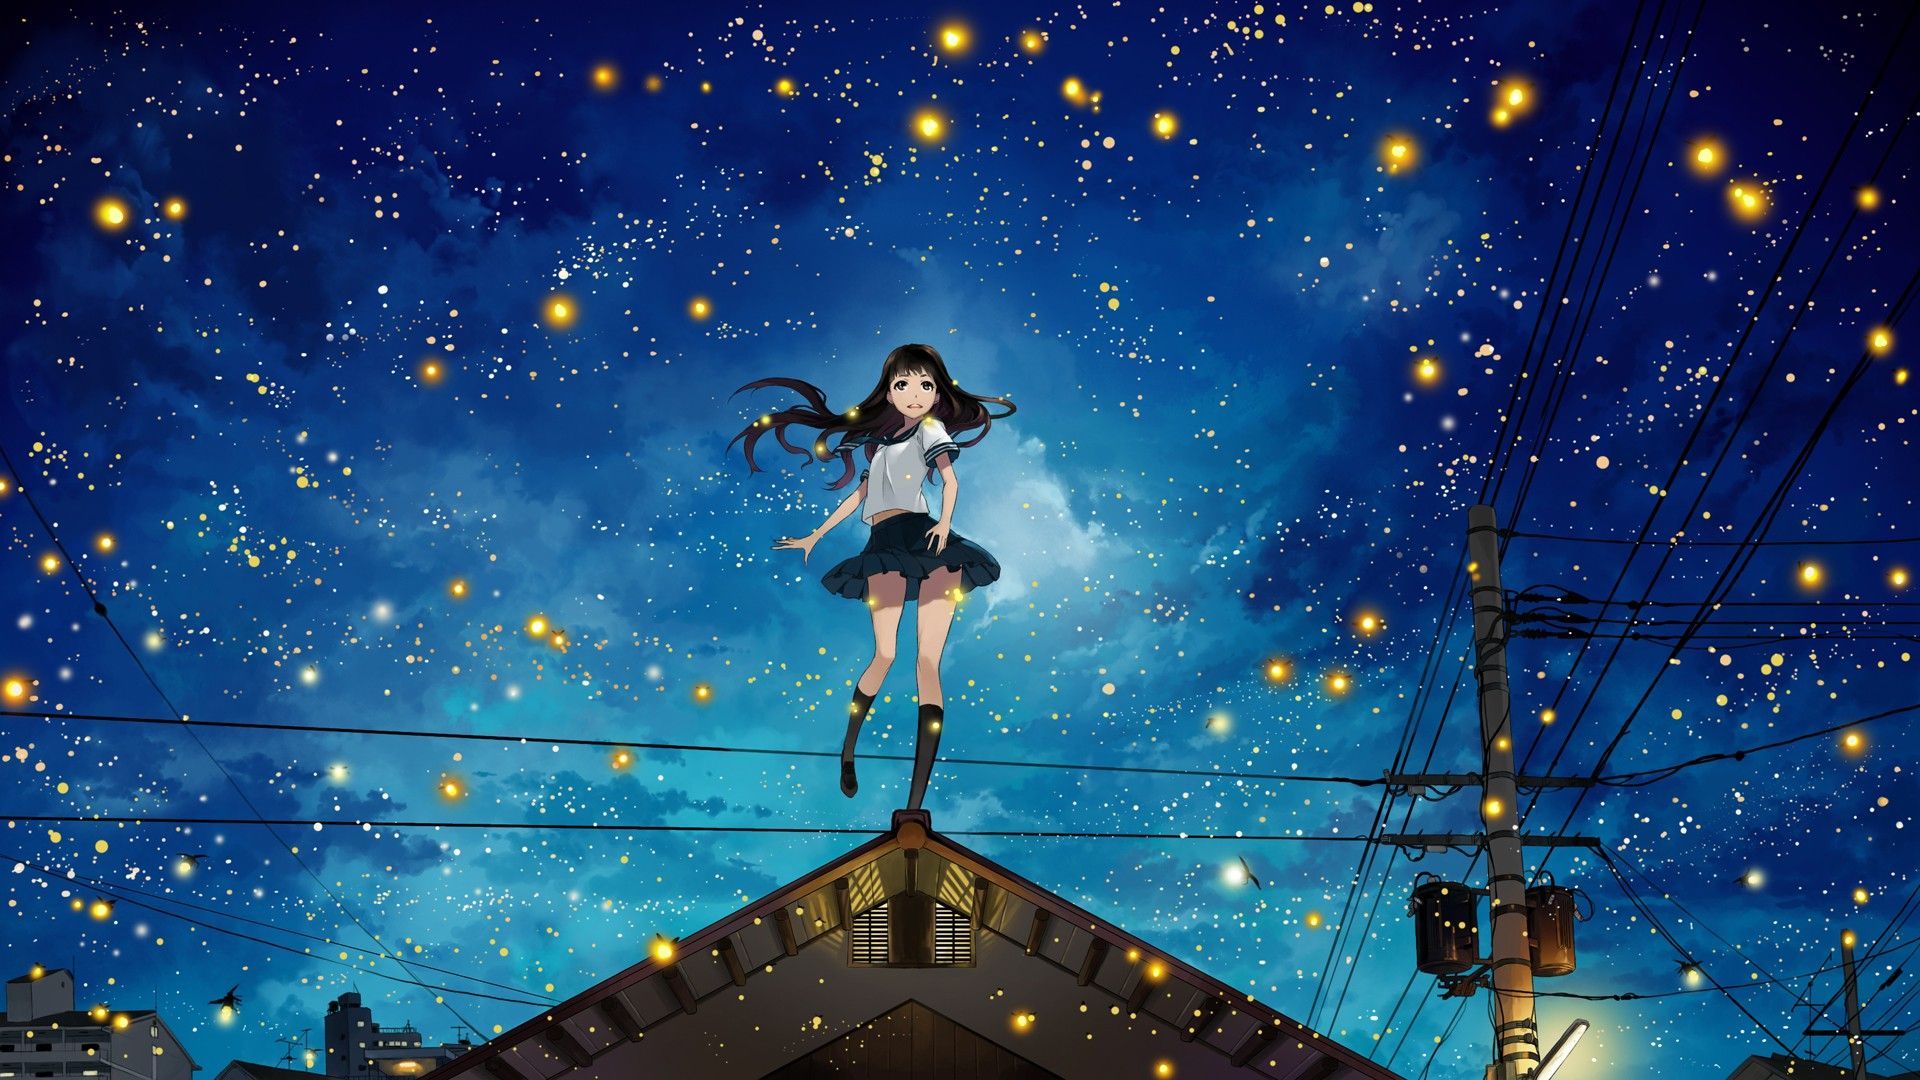 Anime Night Scenery Wallpaper Free Anime Night Scenery Background